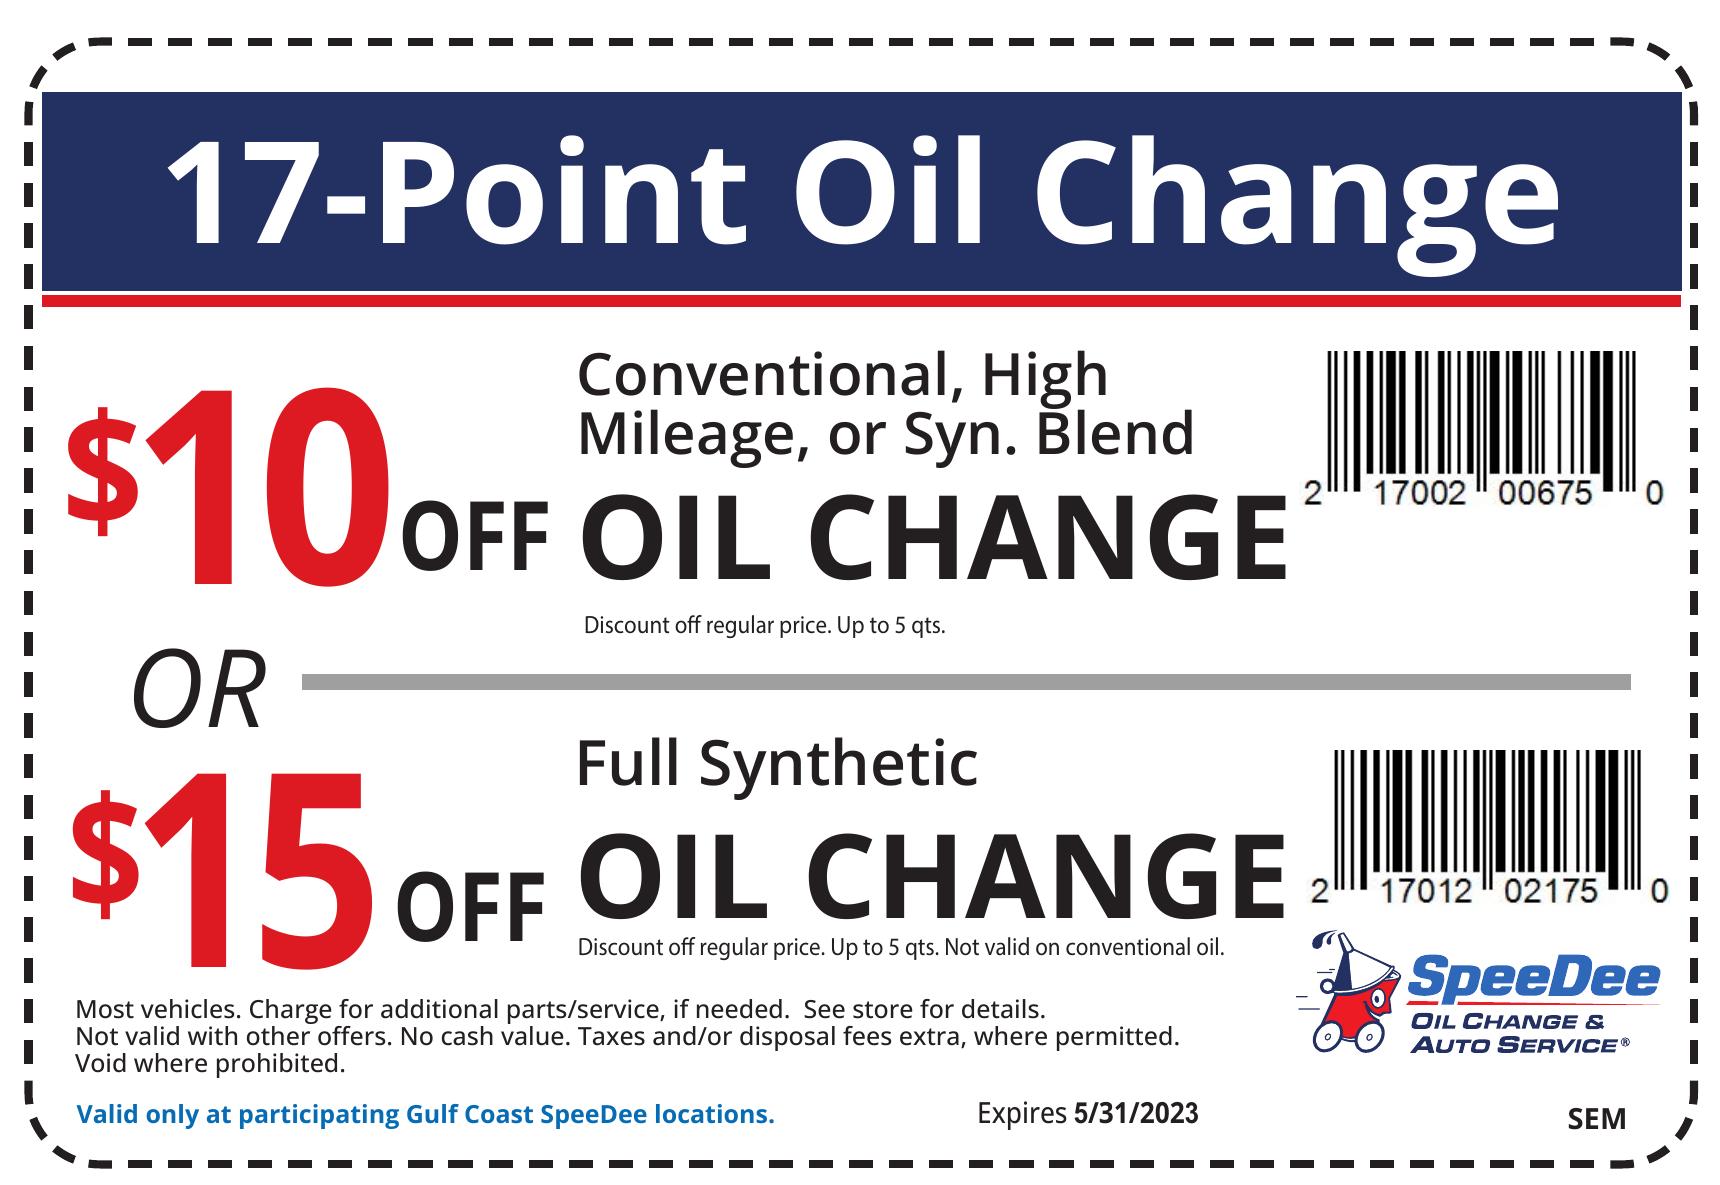 speedee-oil-change-print-coupon